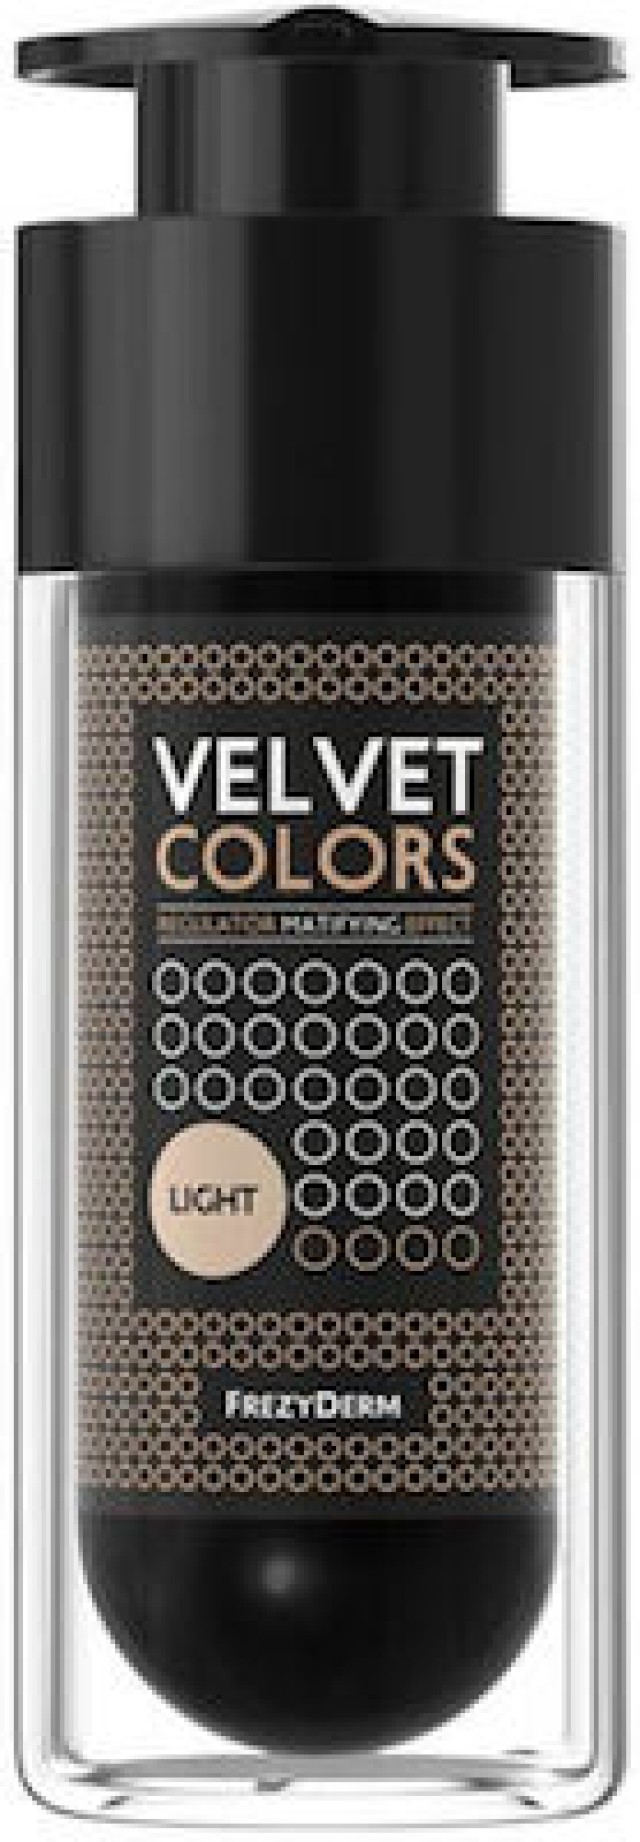 FREZYDERM Velvet Colors Light Make Up Με Ματ Αποτέλεσμα & Βελούδινη Υφή Σε Απαλή Απόχρωση, 30ml